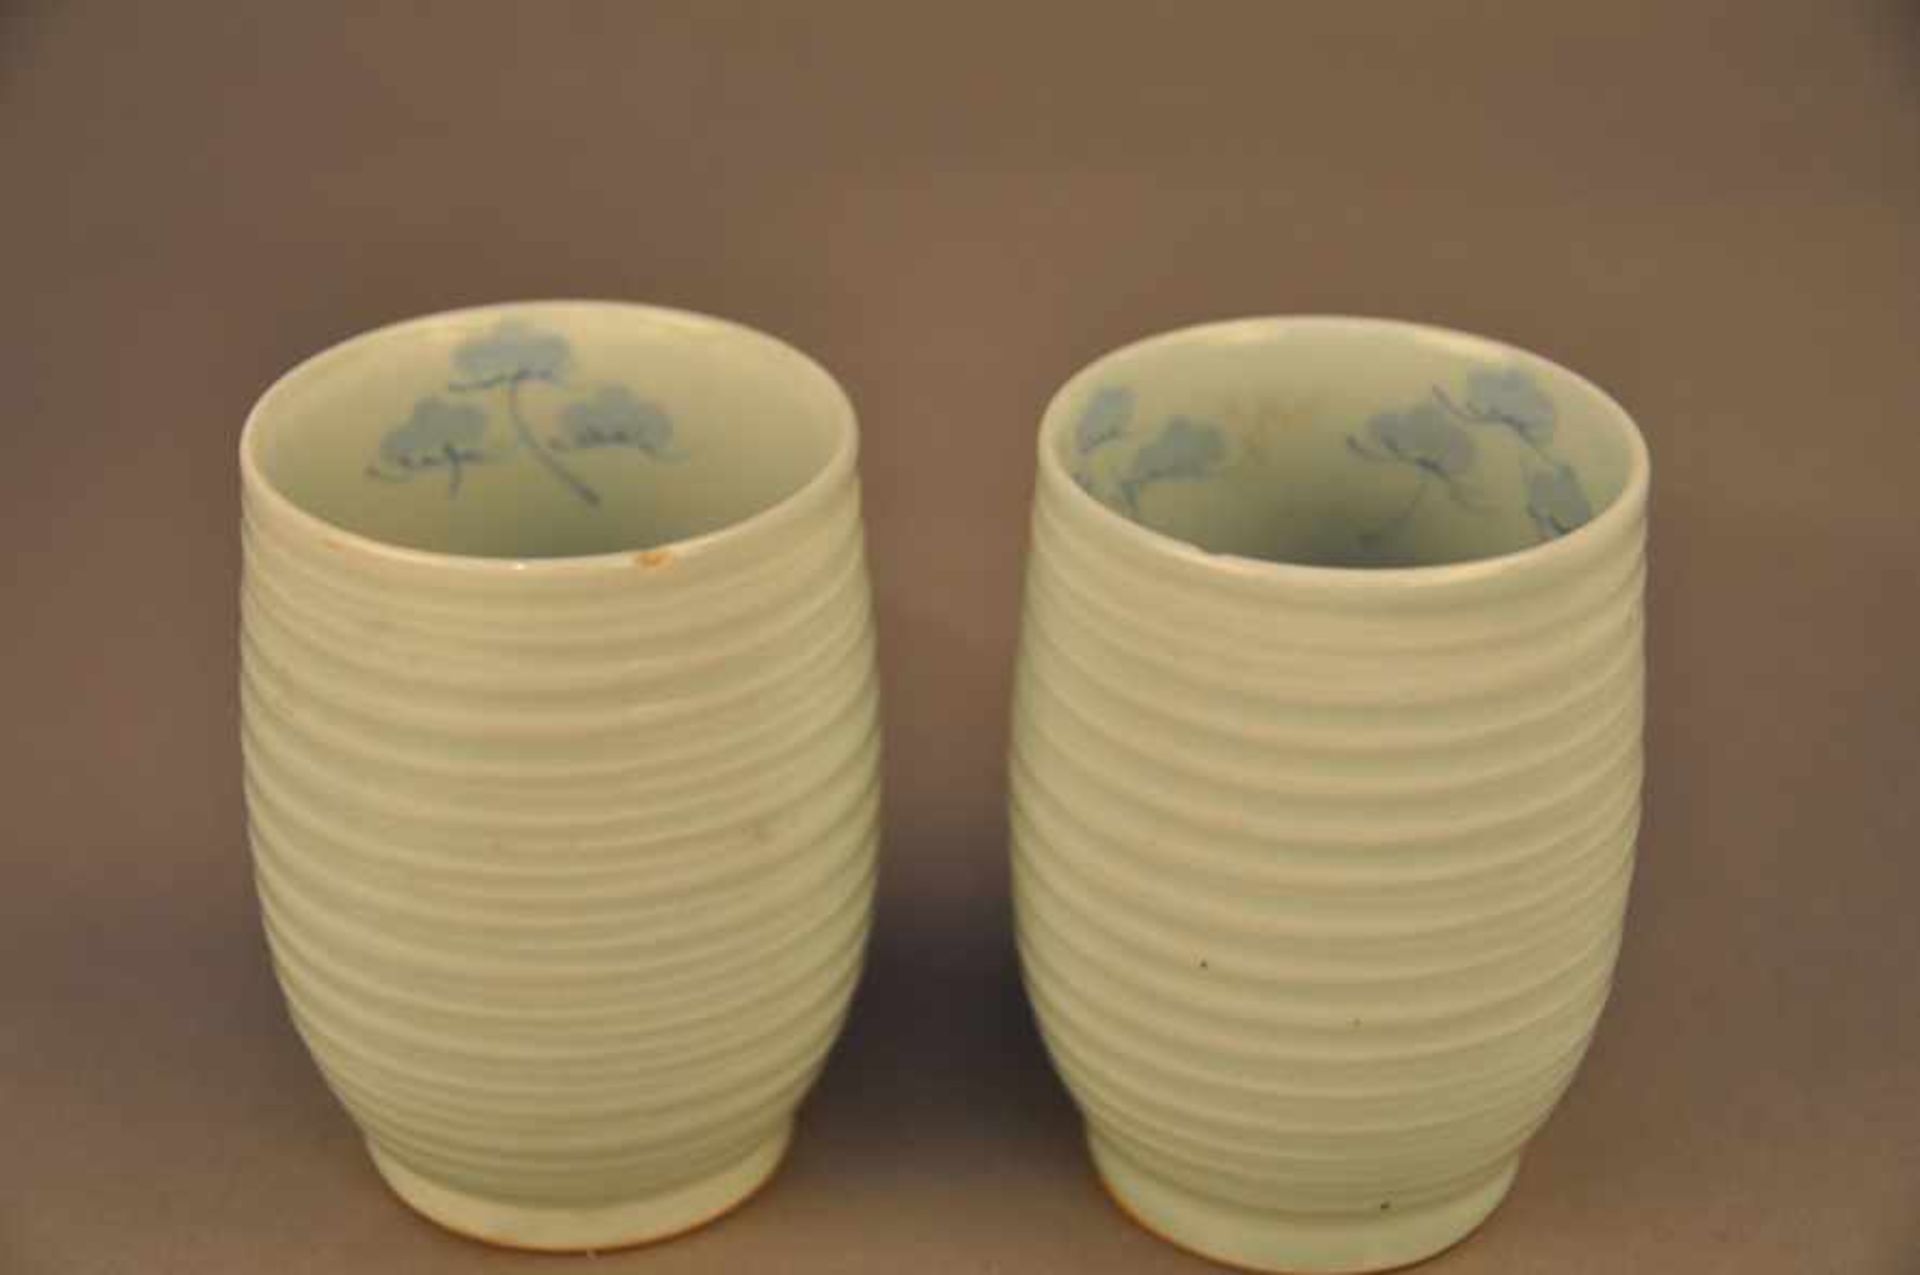 2 asiatische Trinkbecher.Seladonglasur, gemalt, signiert, um 1900. Höhe ca. 9 cm, Stand 4,5 cm. - Image 5 of 7